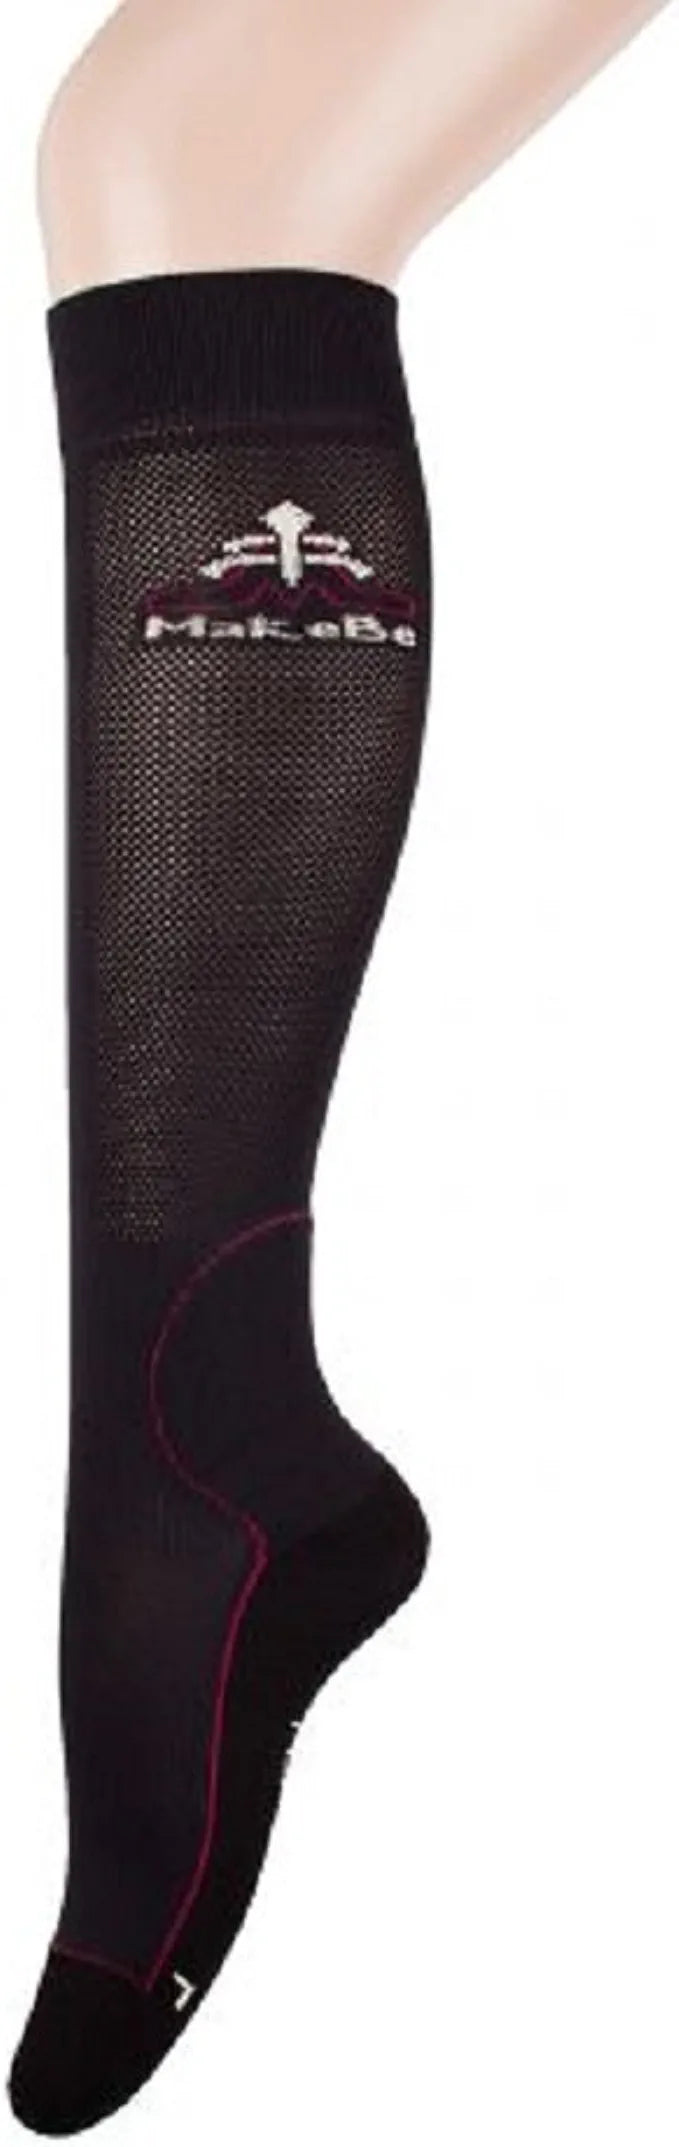 Makebe Technical Sock Deocell Friction Free-Women's Socks MakeBe Black 39-42 